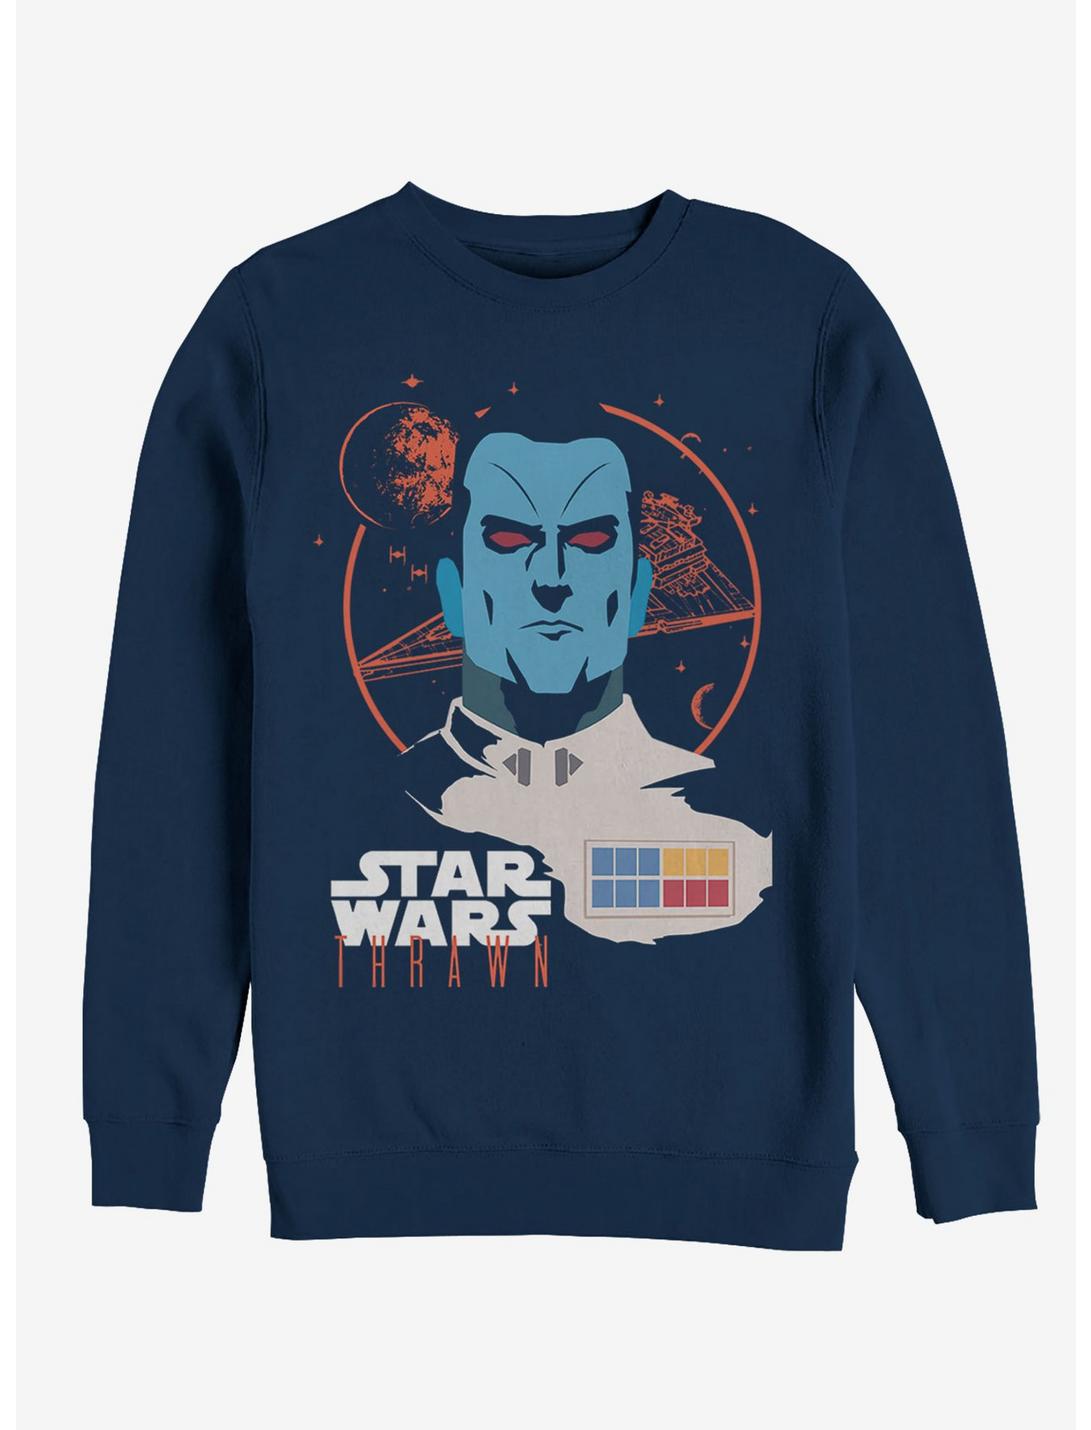 Star Wars Thrawn Space Leader Sweatshirt, NAVY, hi-res